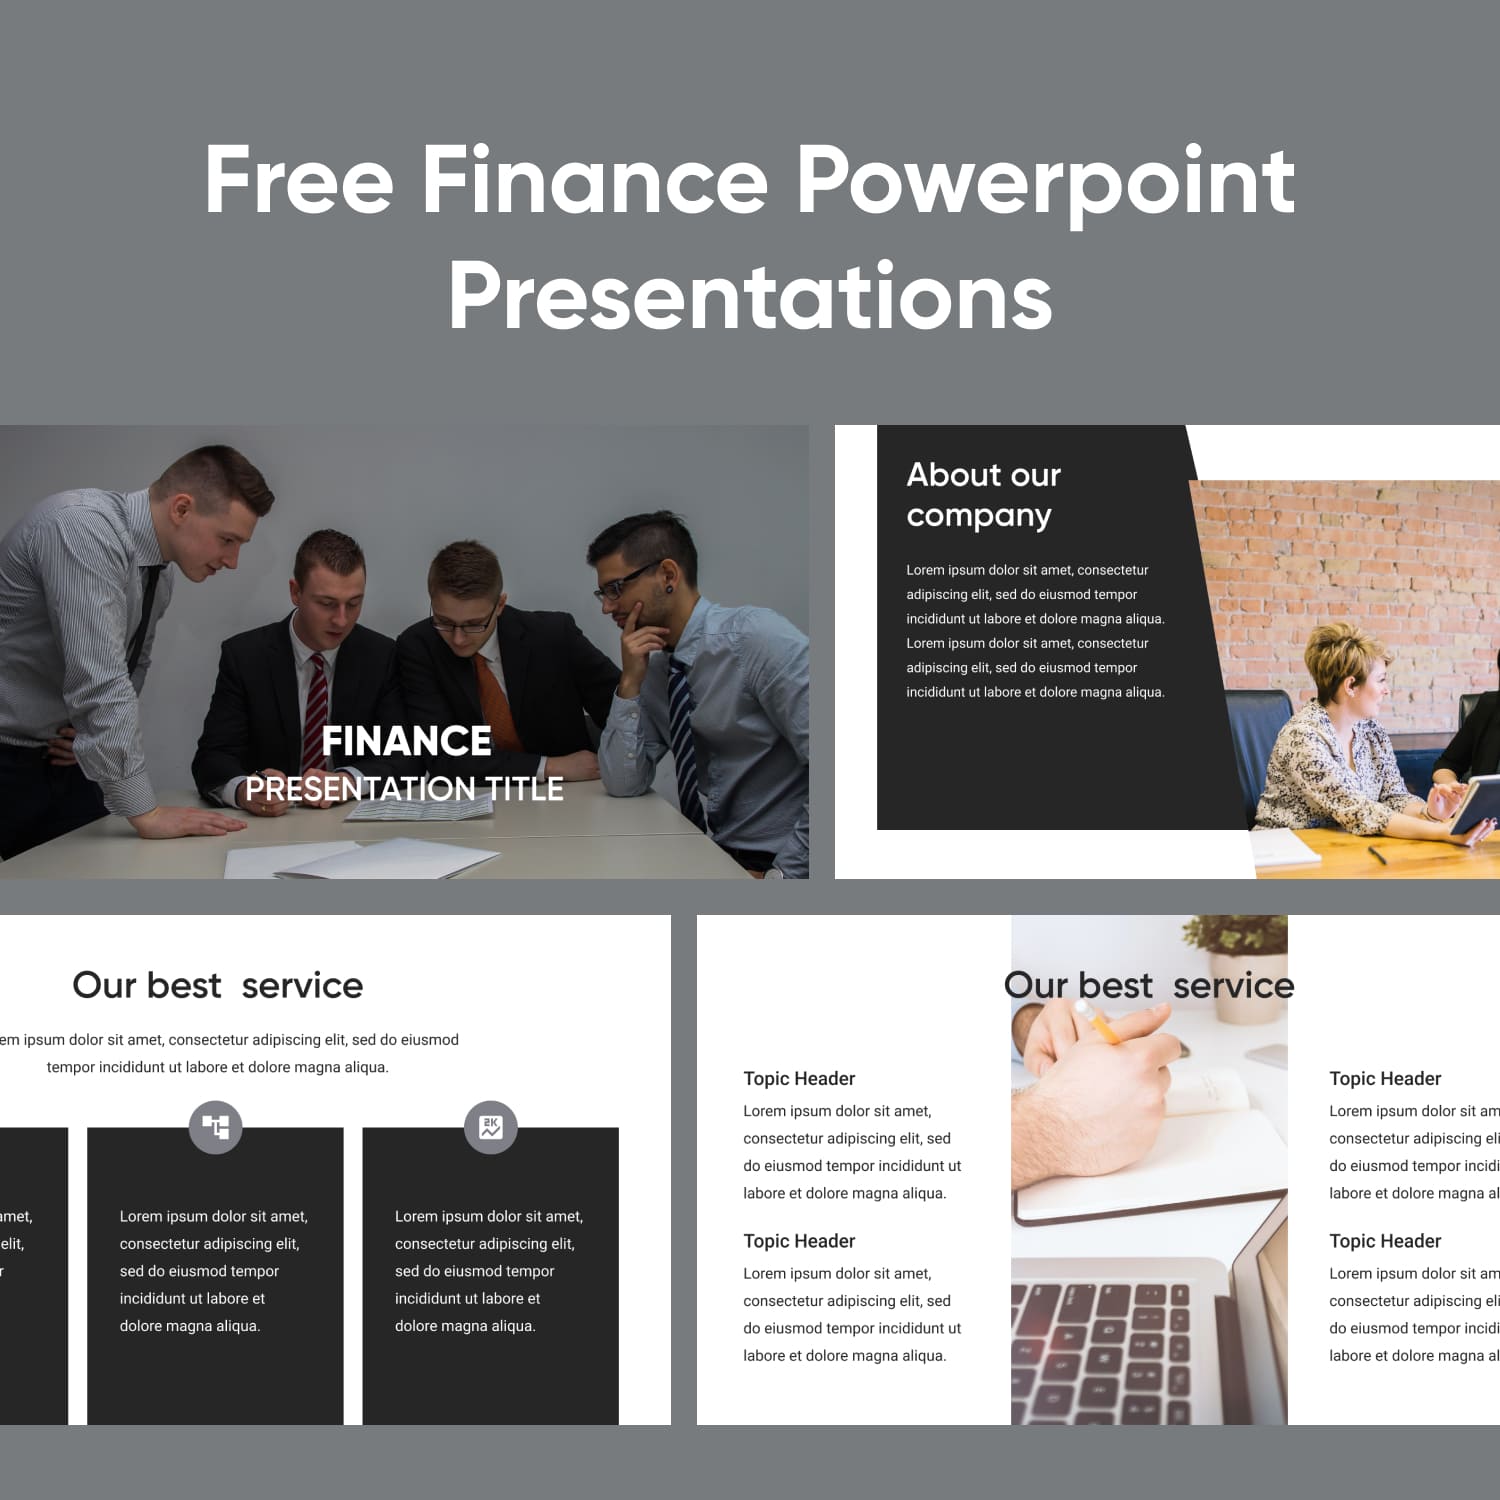 Free Finance Powerpoint Presentations 1500x1500 1.